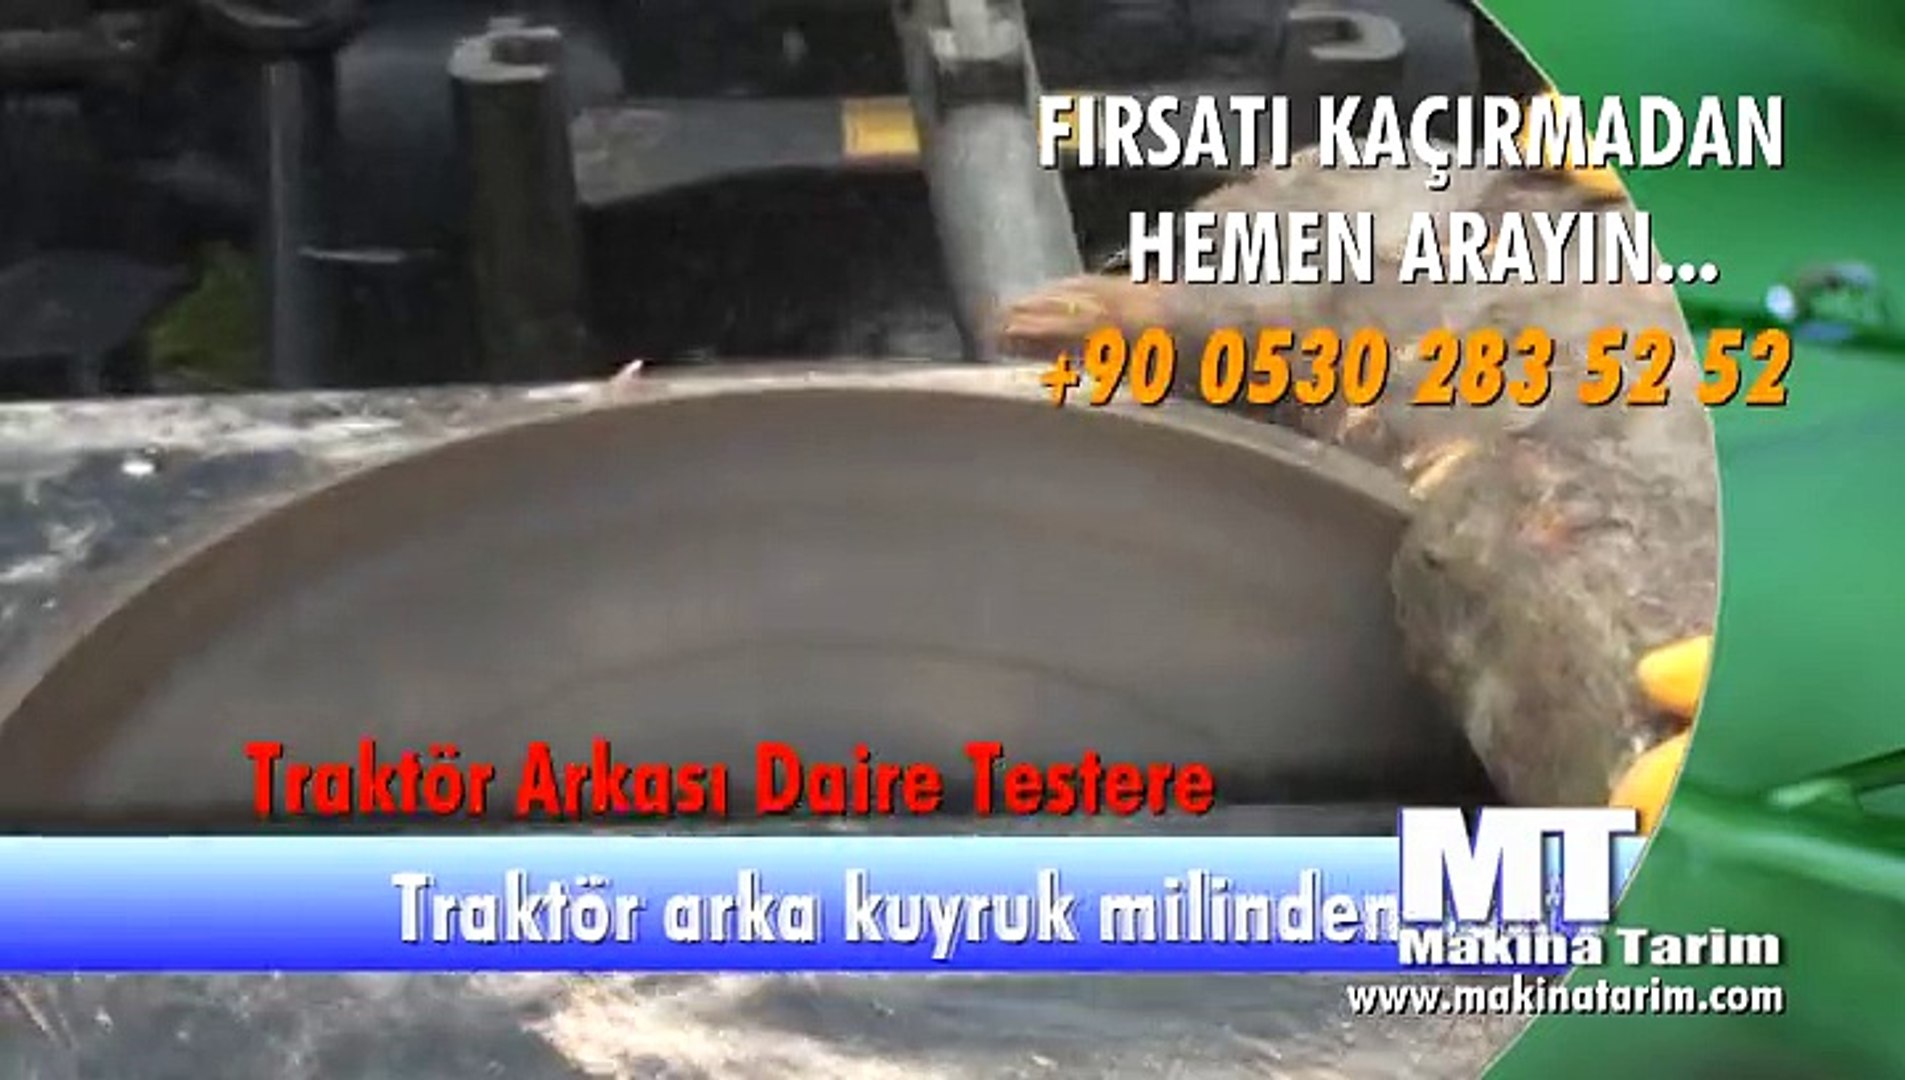 traktör arkası daire testere (www.makinatarim.com) - Dailymotion Video